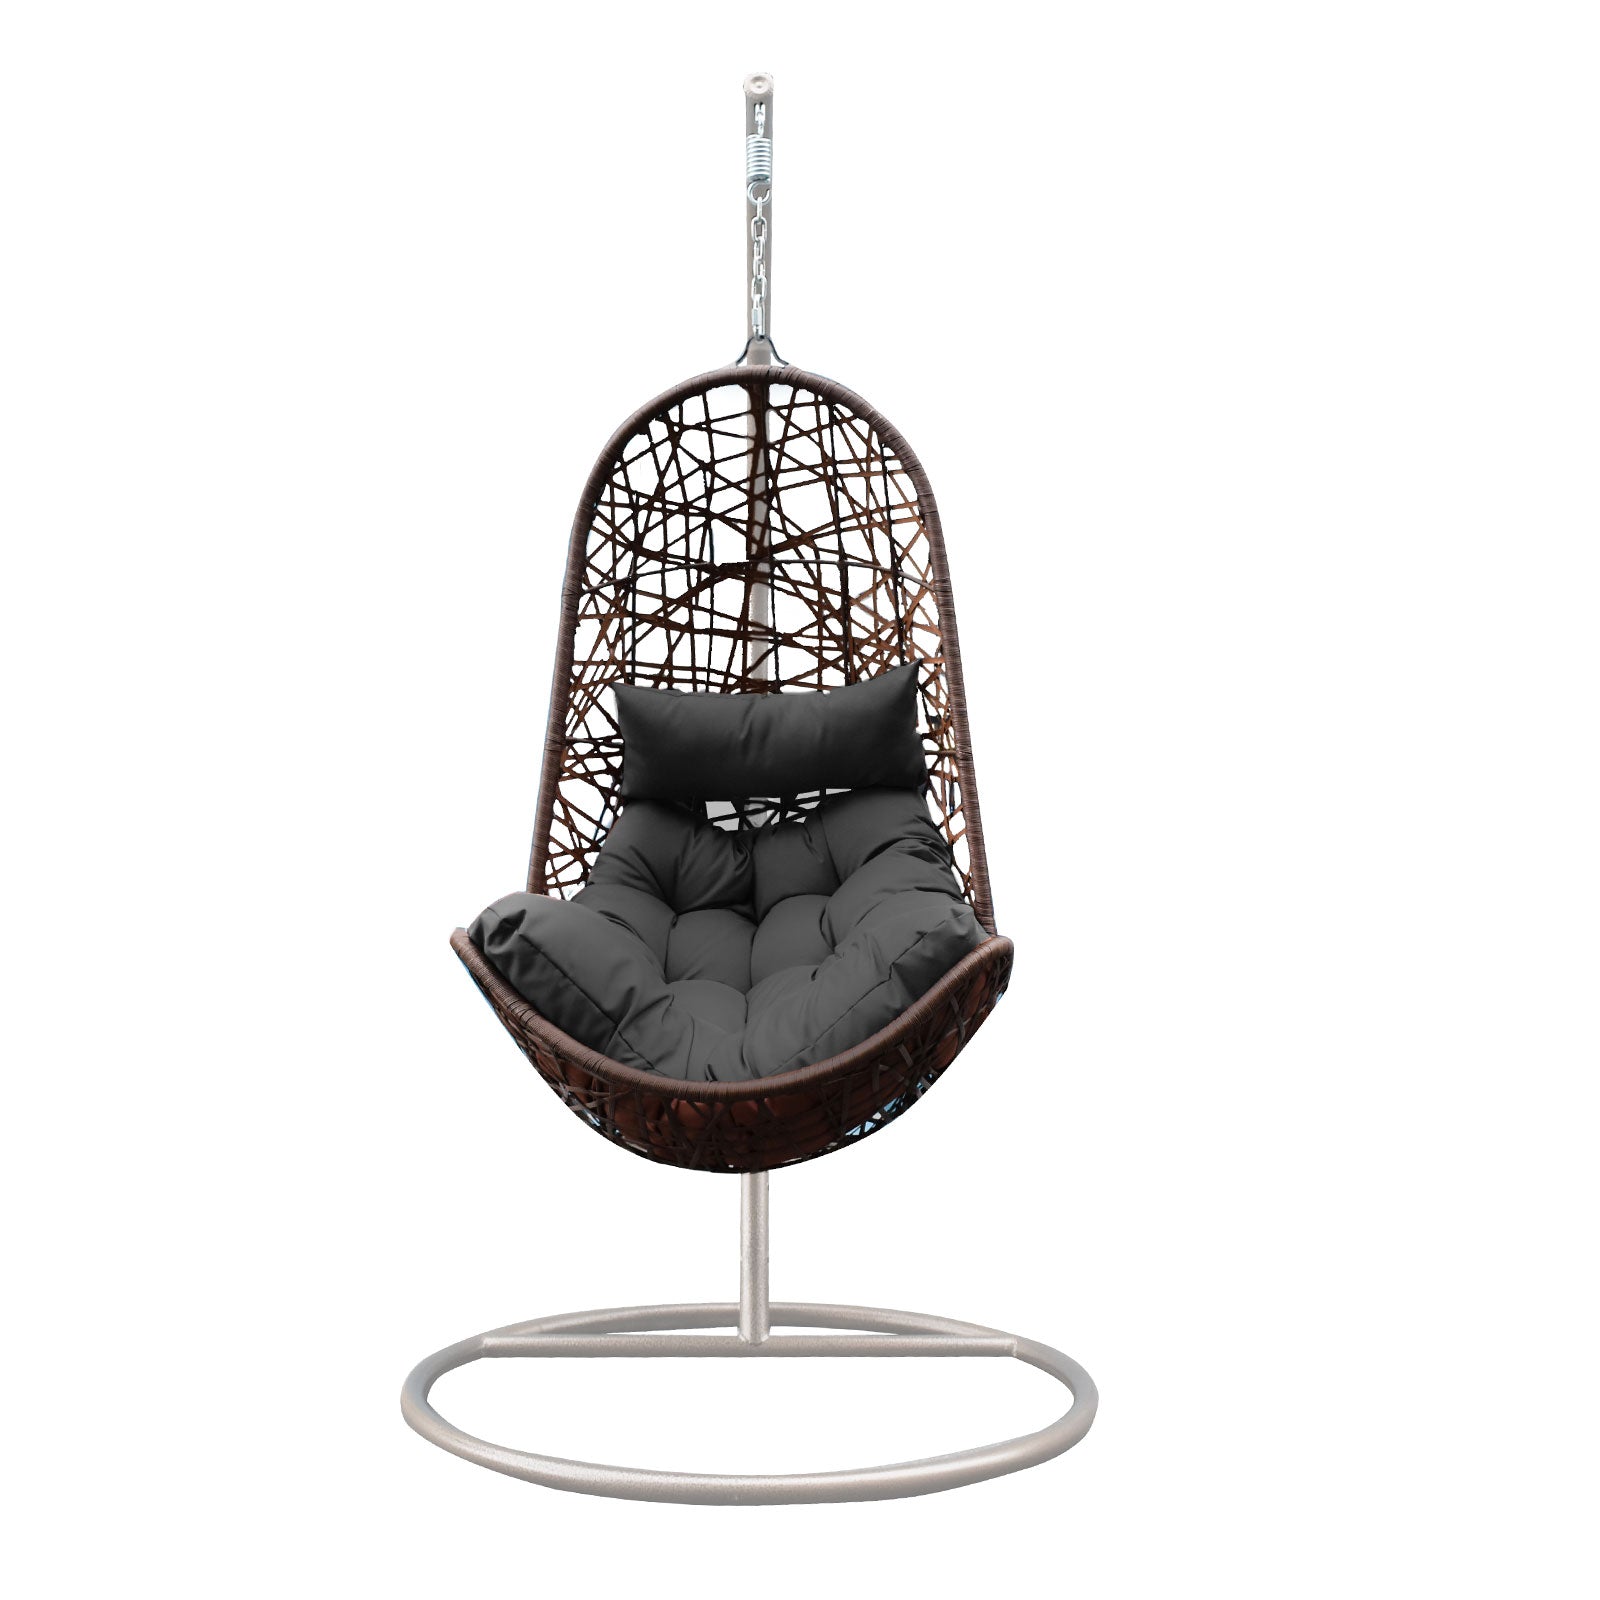 Arcadia Furniture Egg Chair - Oatmeal and Grey